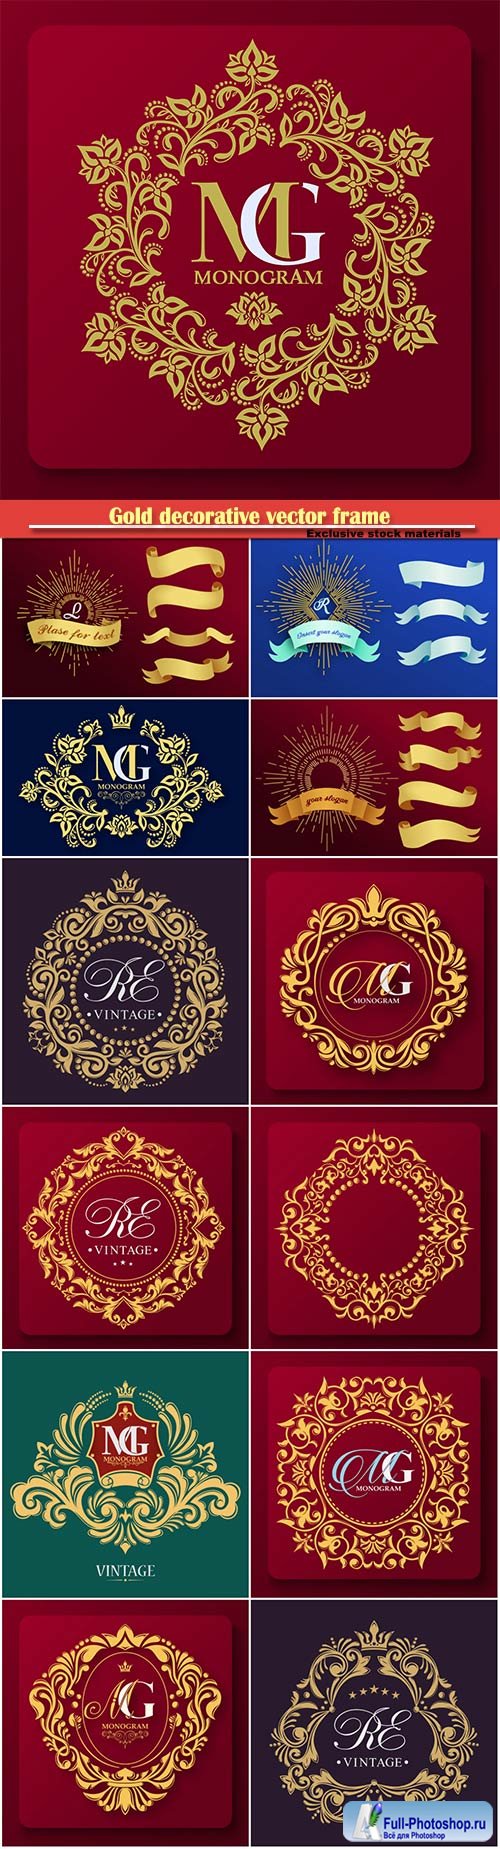 Gold decorative vector frame, logo templates and monogram, elegant emblem